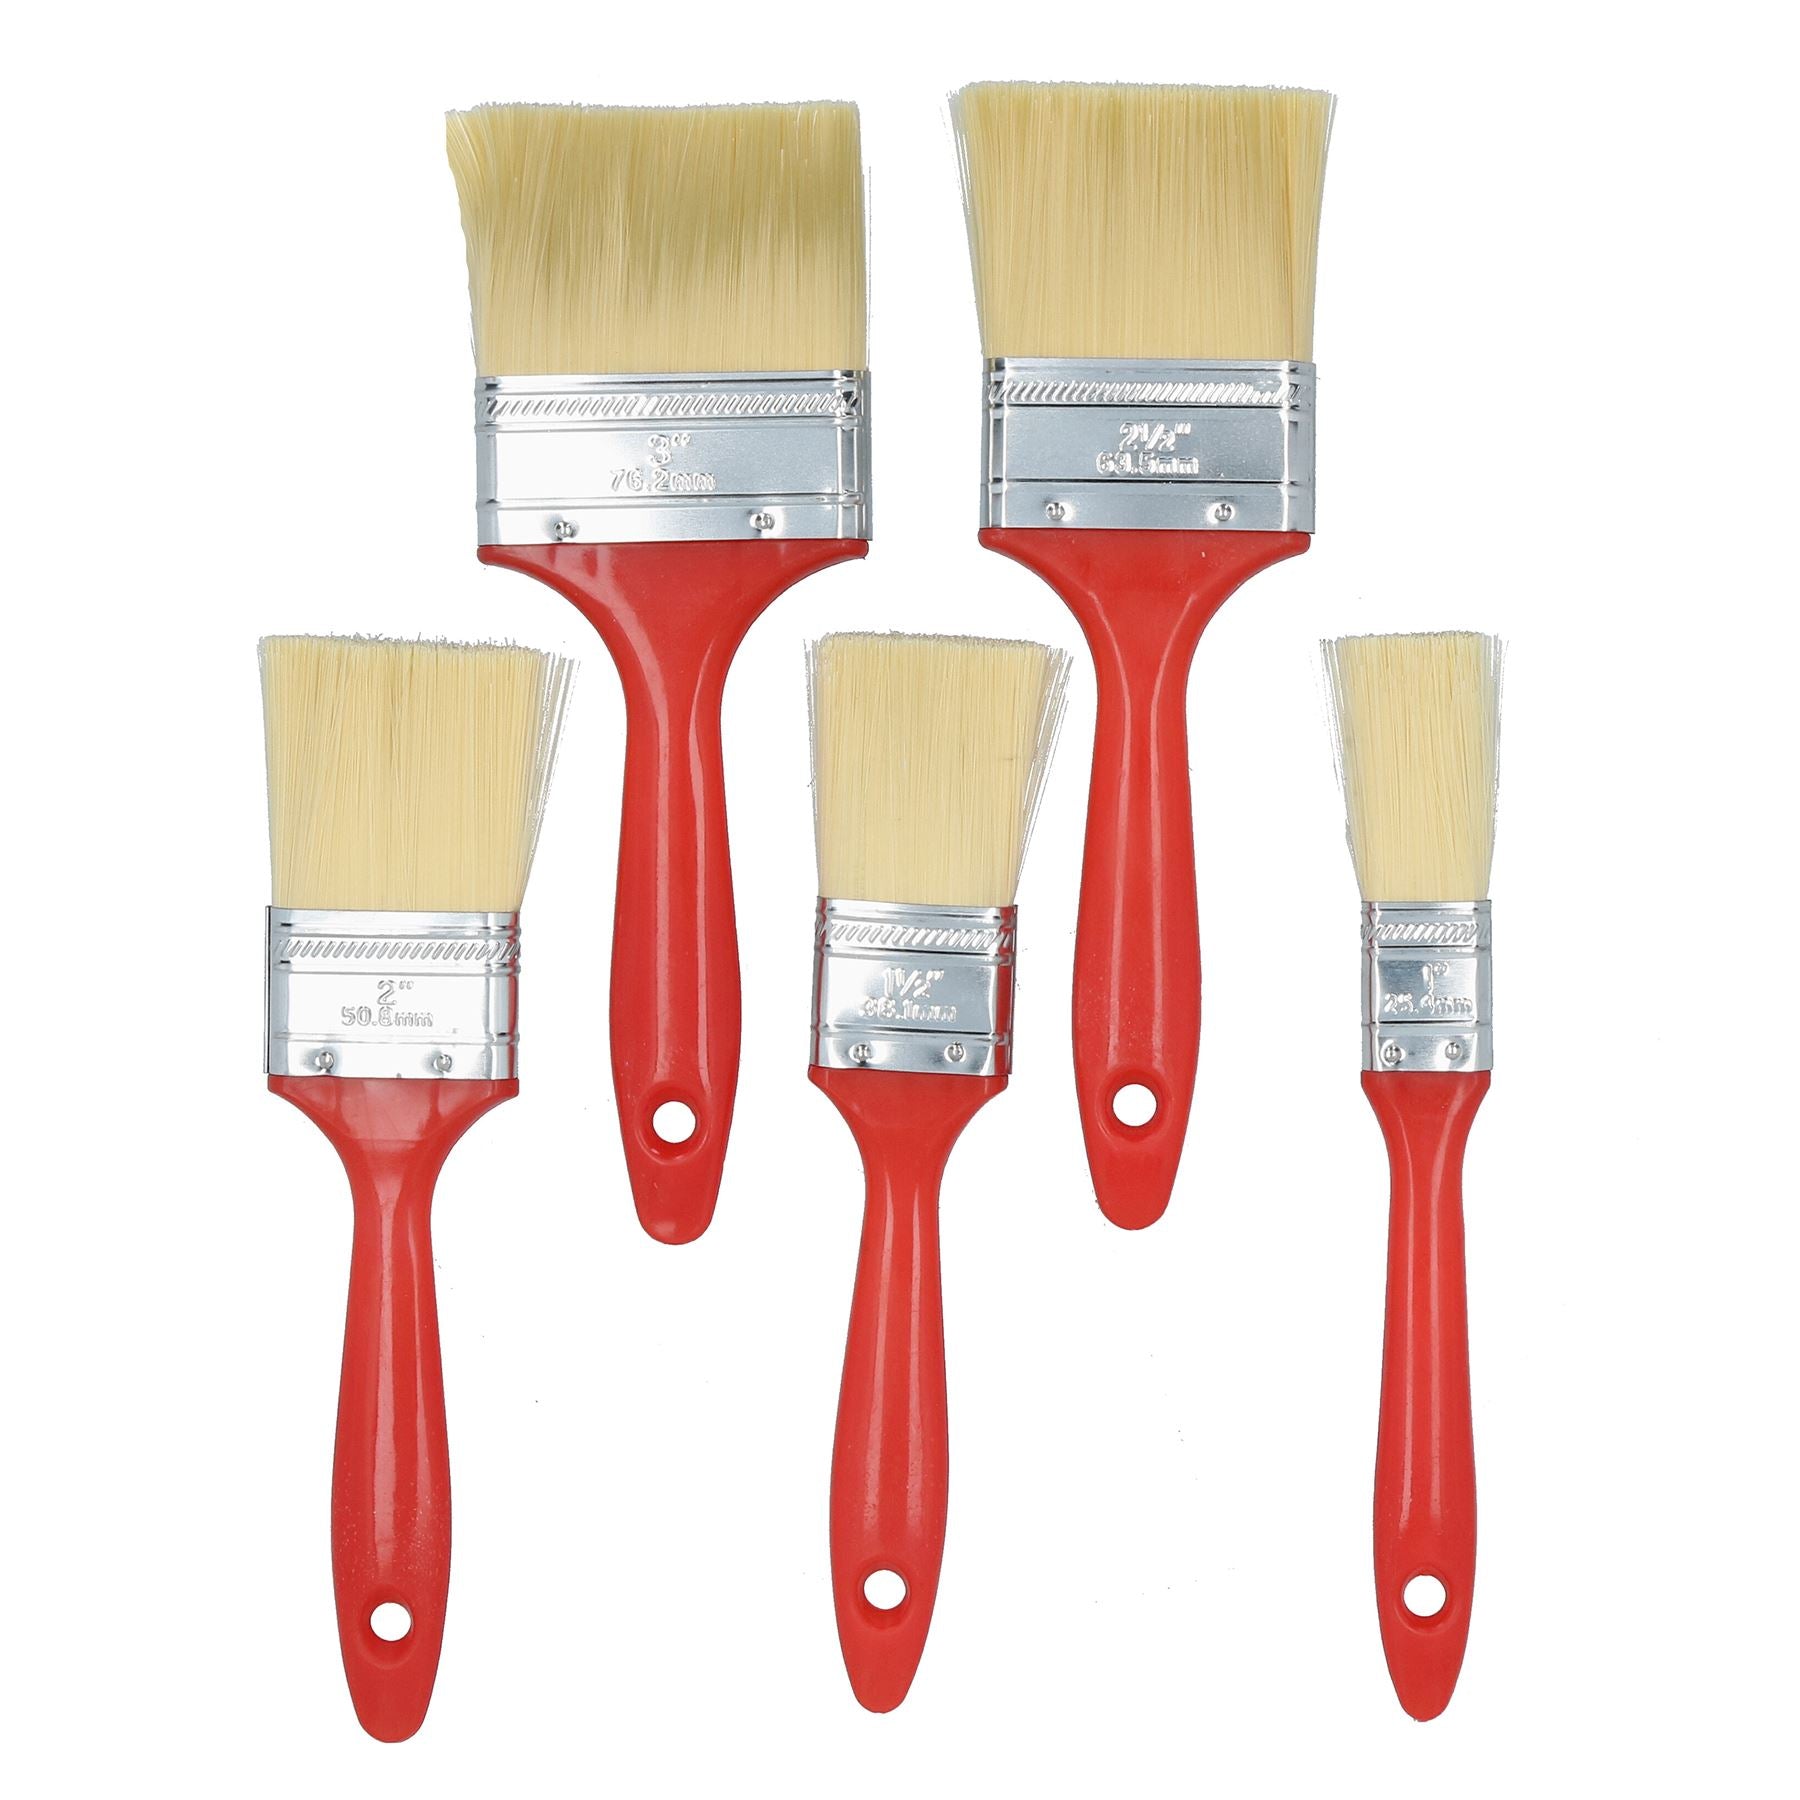 5pc Paint Brush Home Decor Set Painting + Decorating 25mm – 75mm Brushes